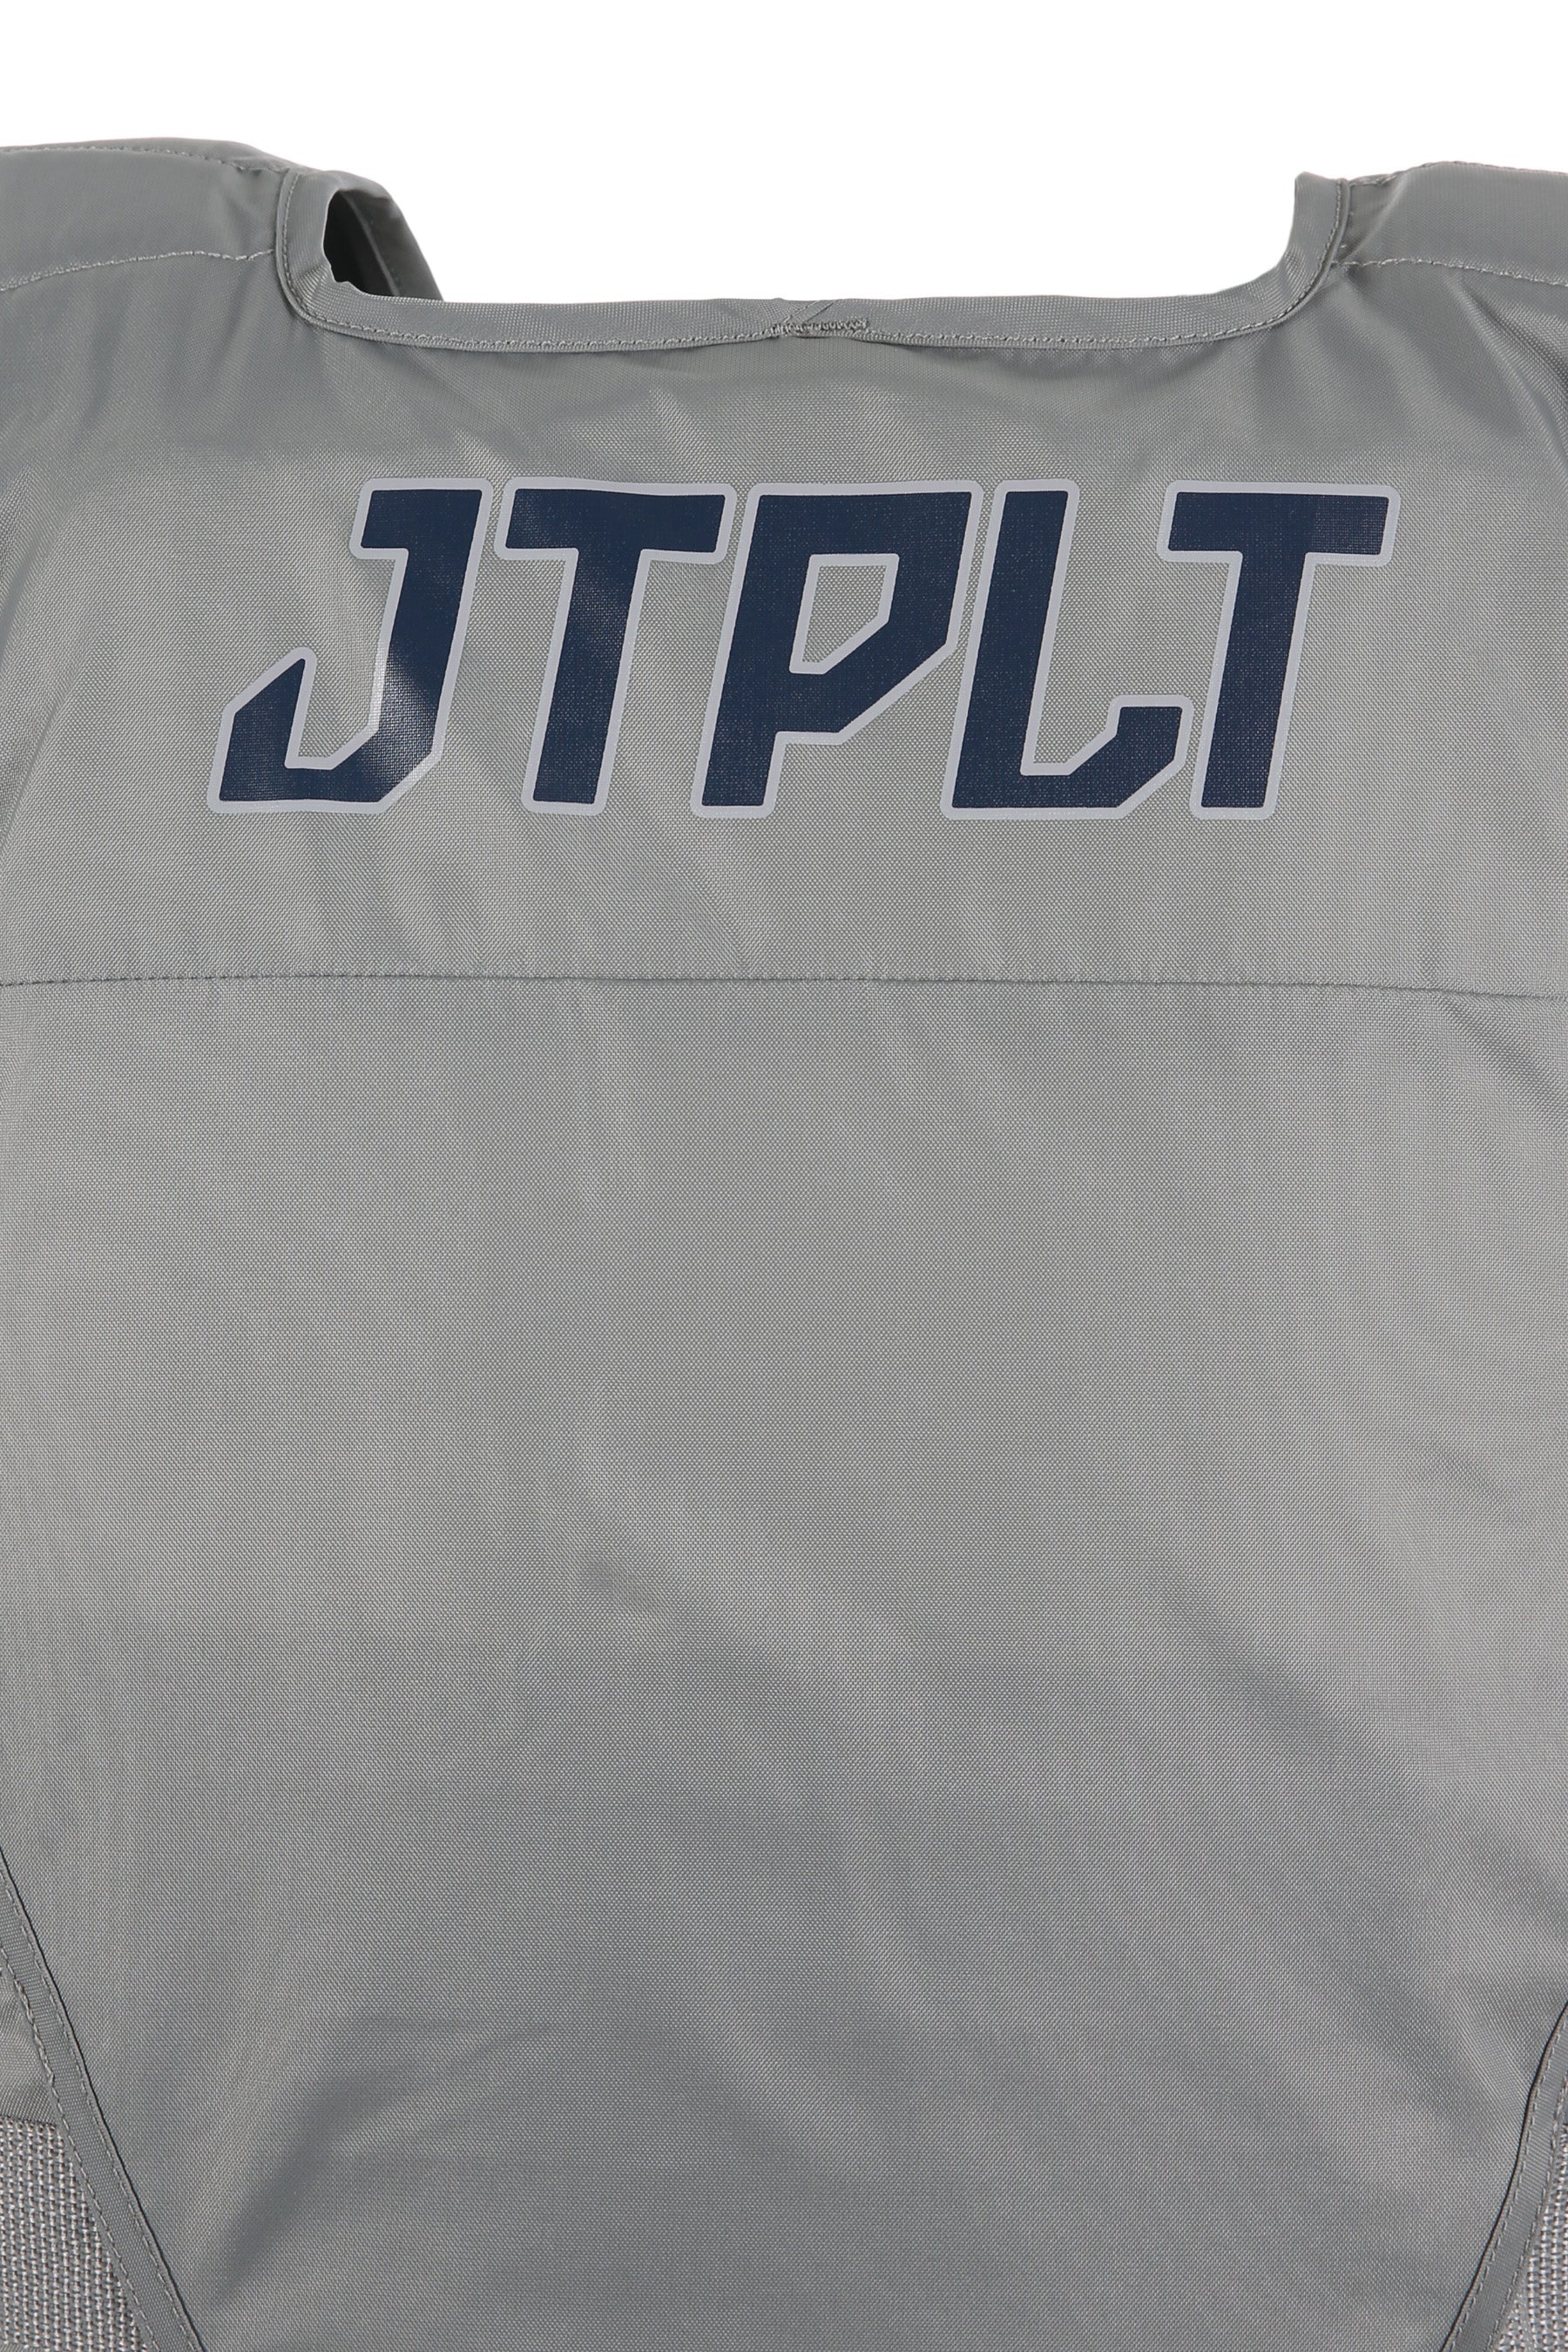 Jetpilot Rx Vault Mens Nylon Life Jacket - Grey 4